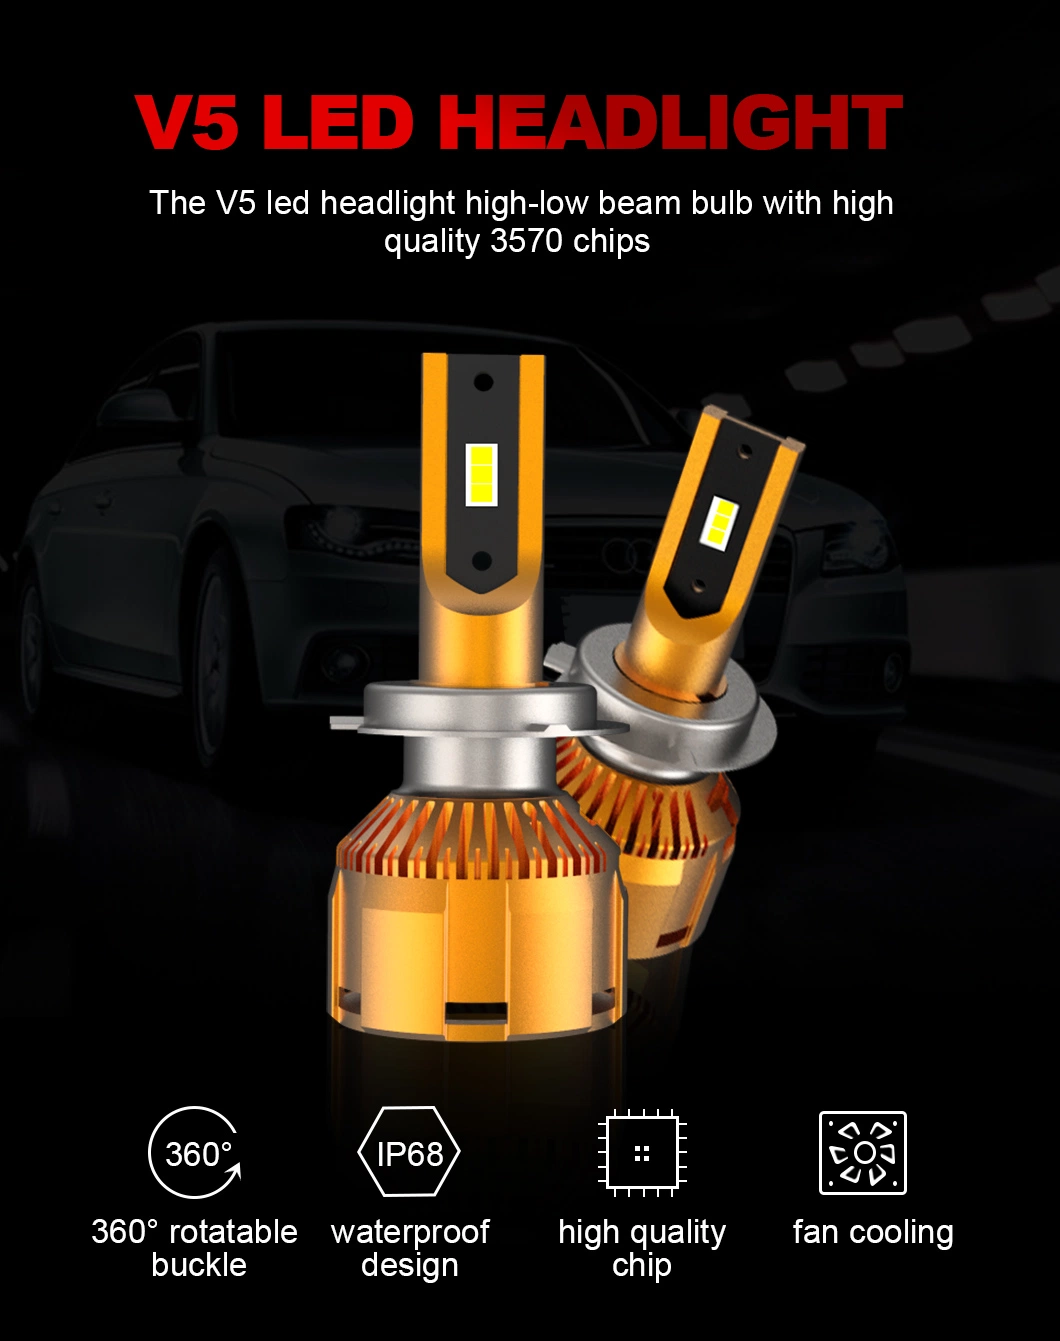 10% off CE DOT High Brightness 7000lm H11 H4 Car LED Headlight